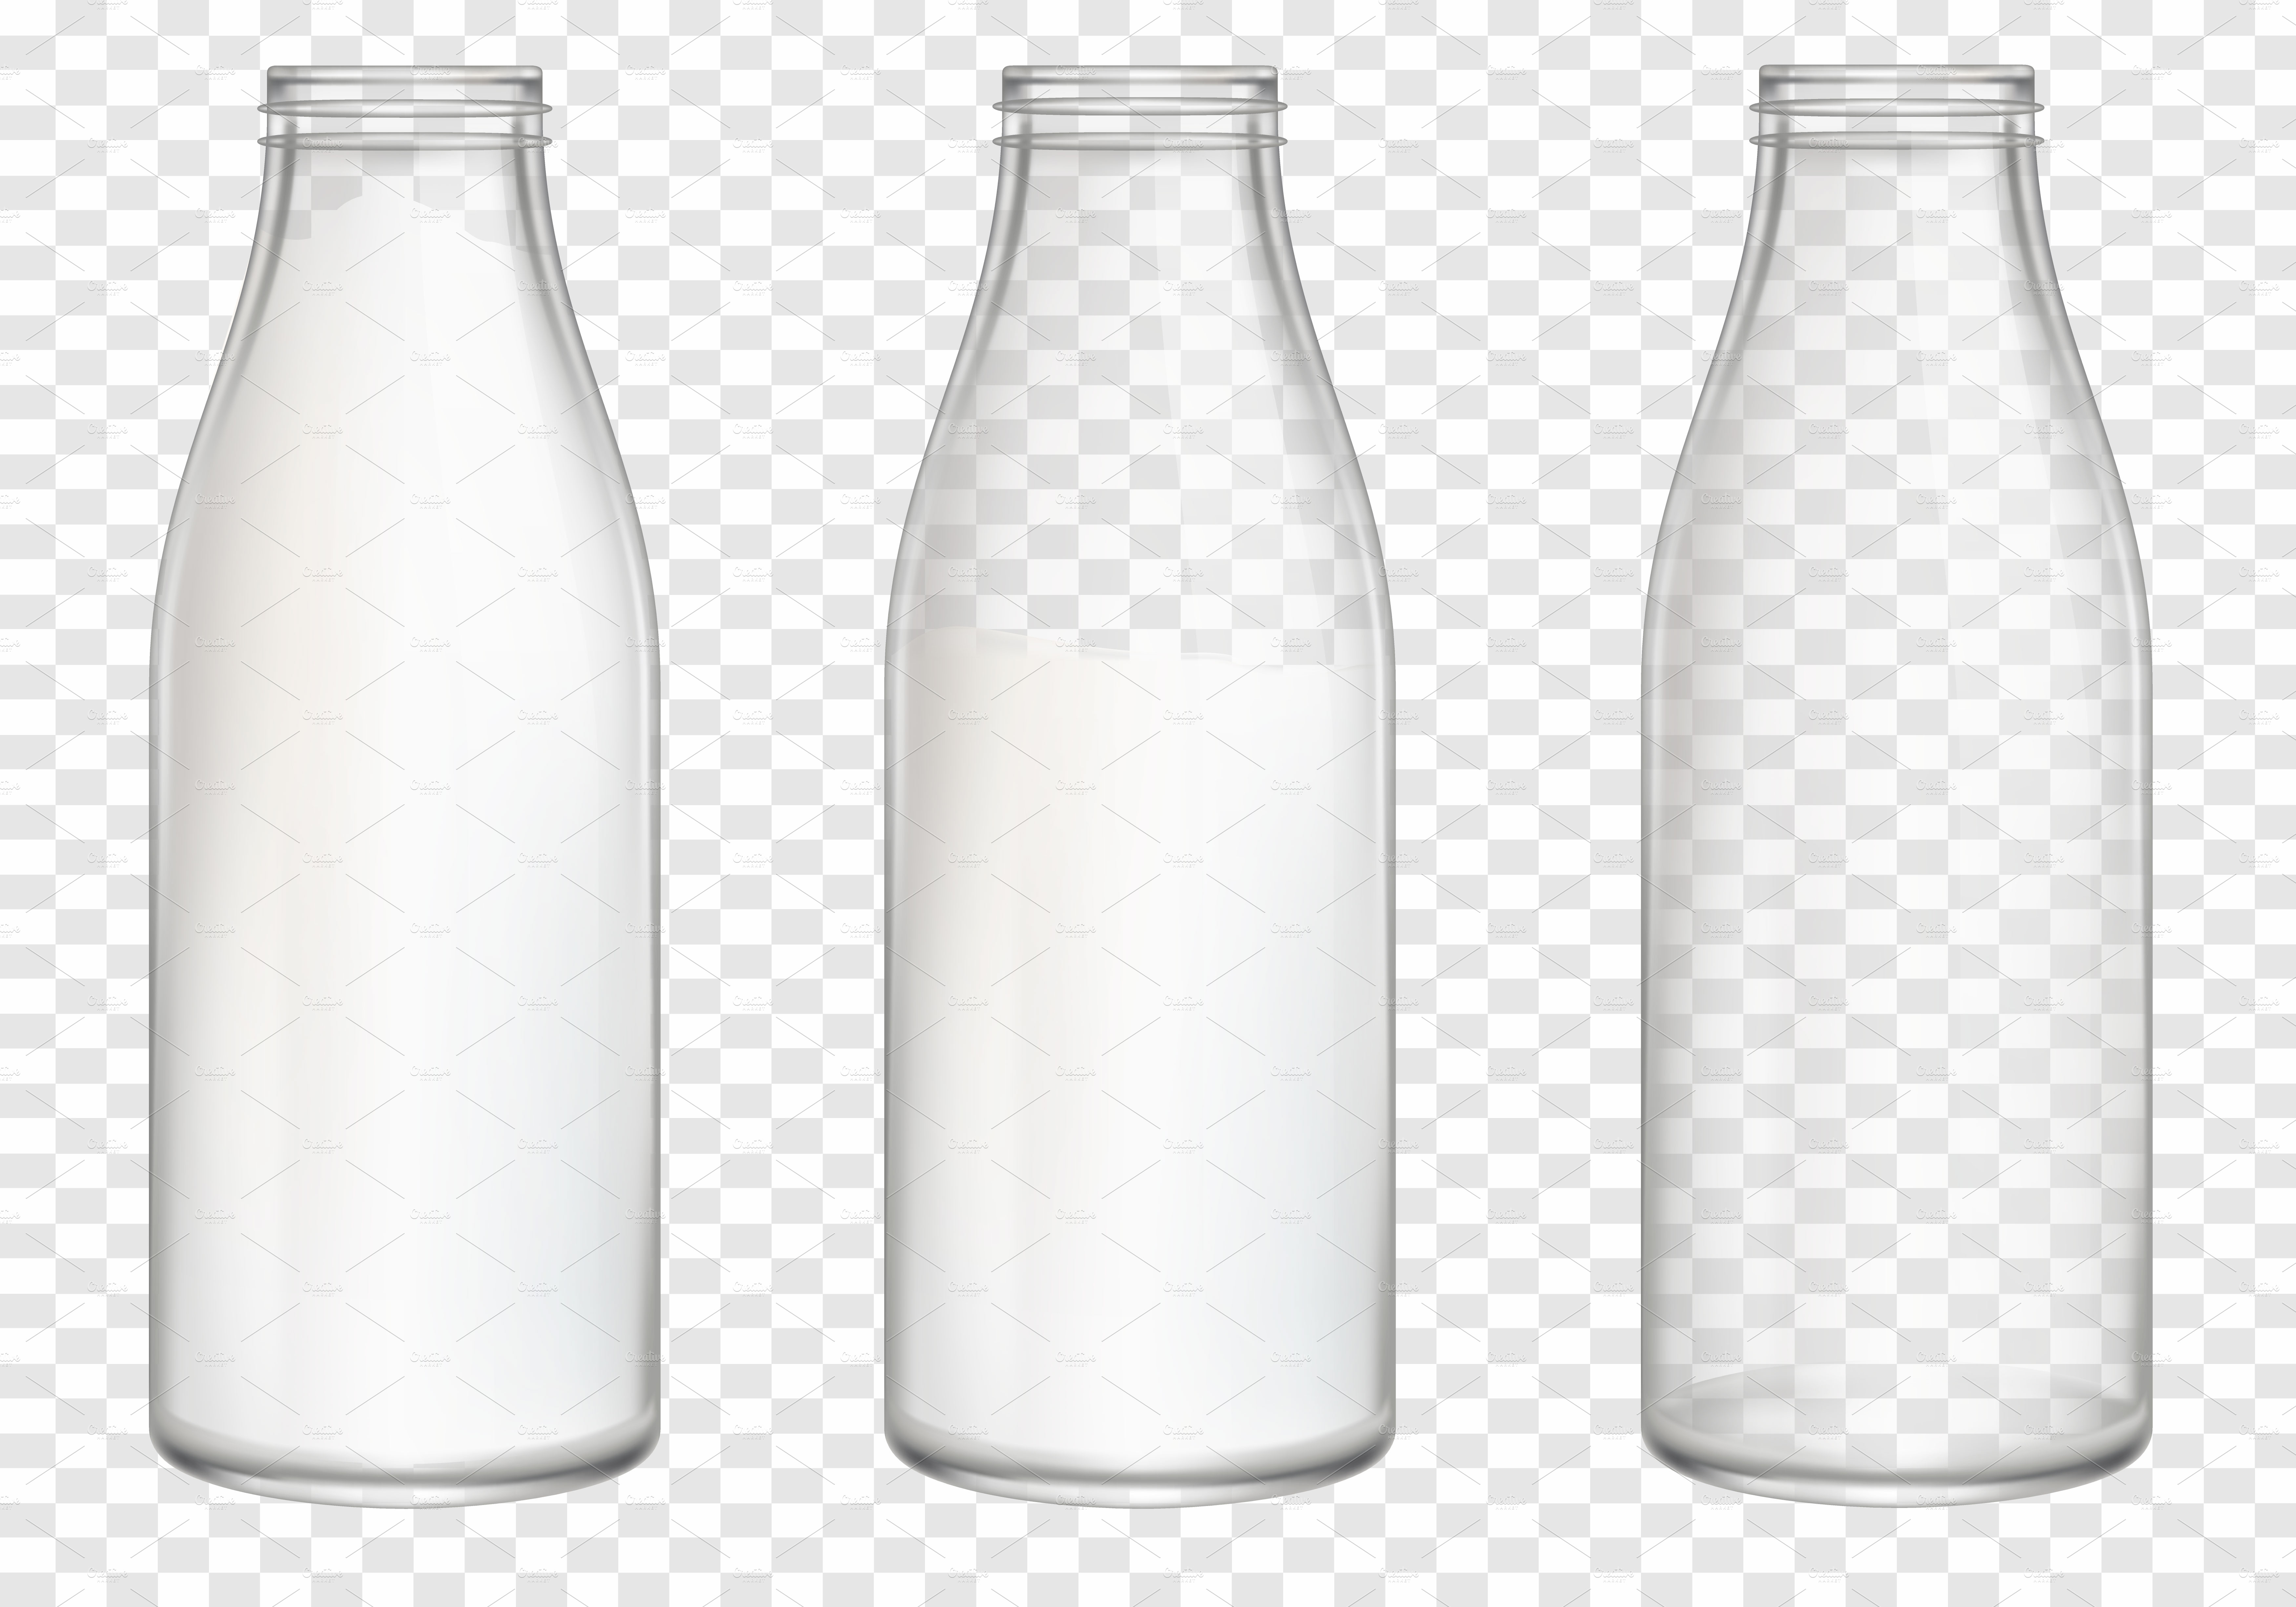 Download Realistic Milk Bottles Vector Art ~ Illustrations ...